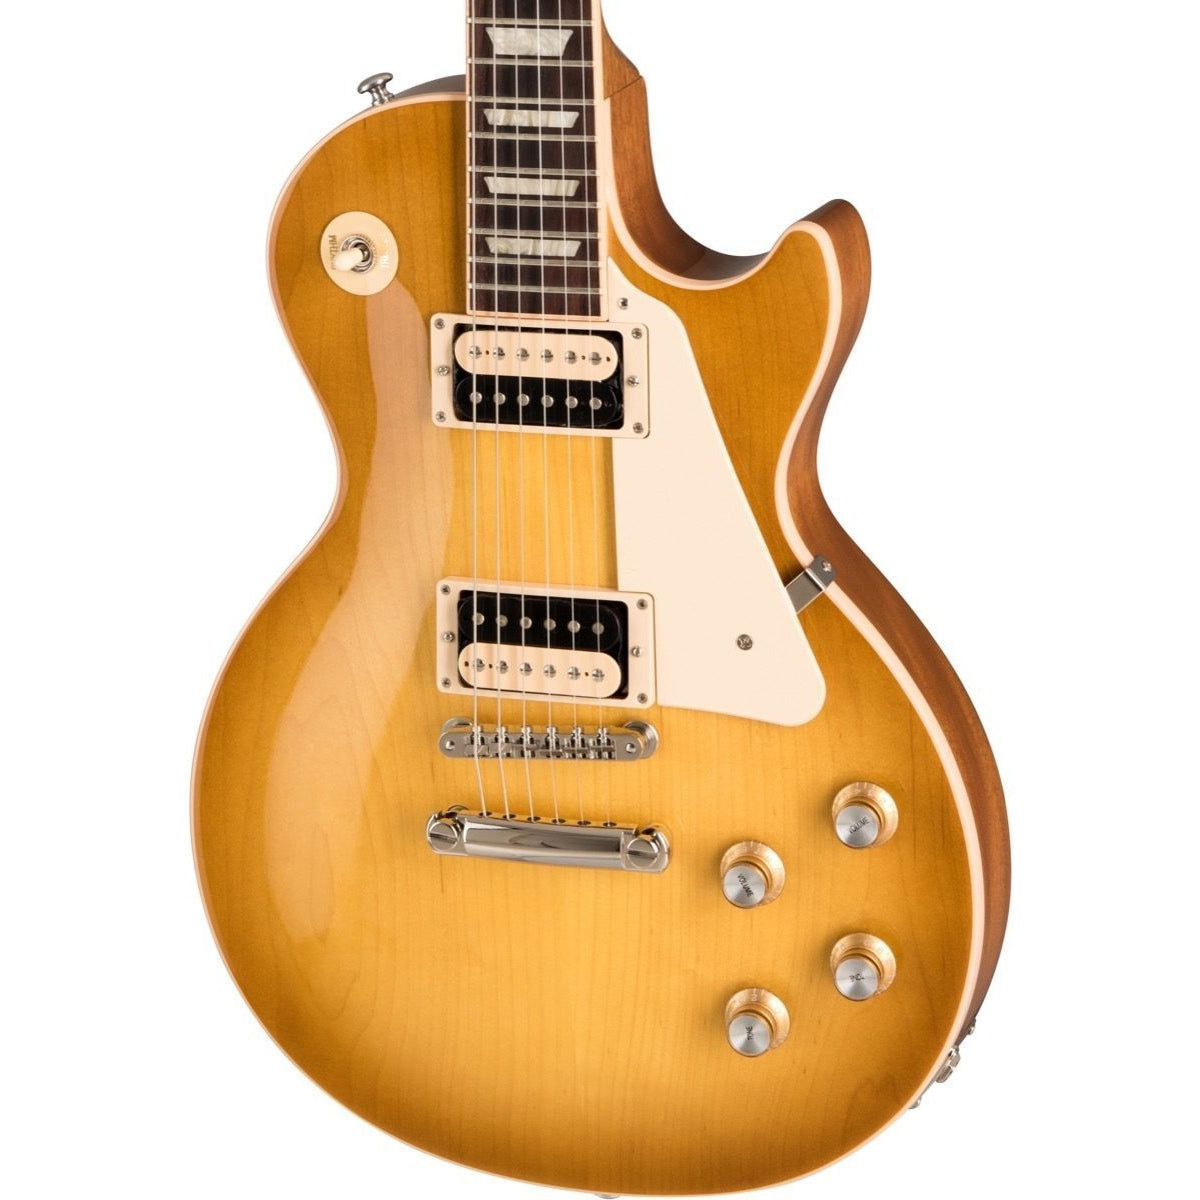 Gibson Les Paul Classic Electric Guitar, Honeyburst